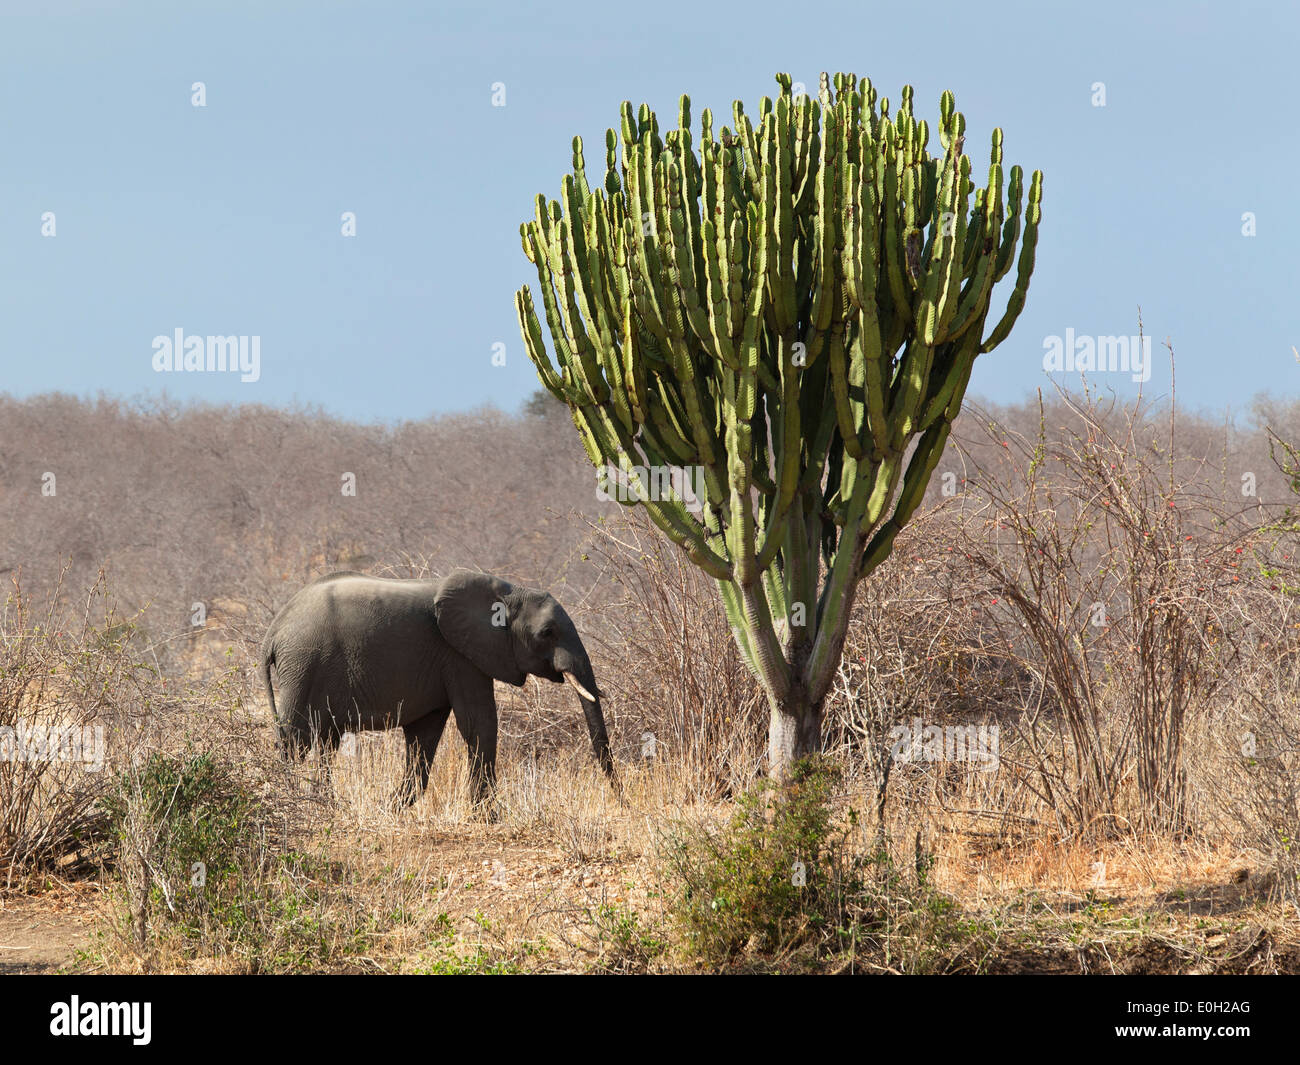 African Elephant, Loxodonta africana and euphorbia, Euphorbia candelabrum, Ruaha National Park, Tanzania, East Africa, Africa Stock Photo